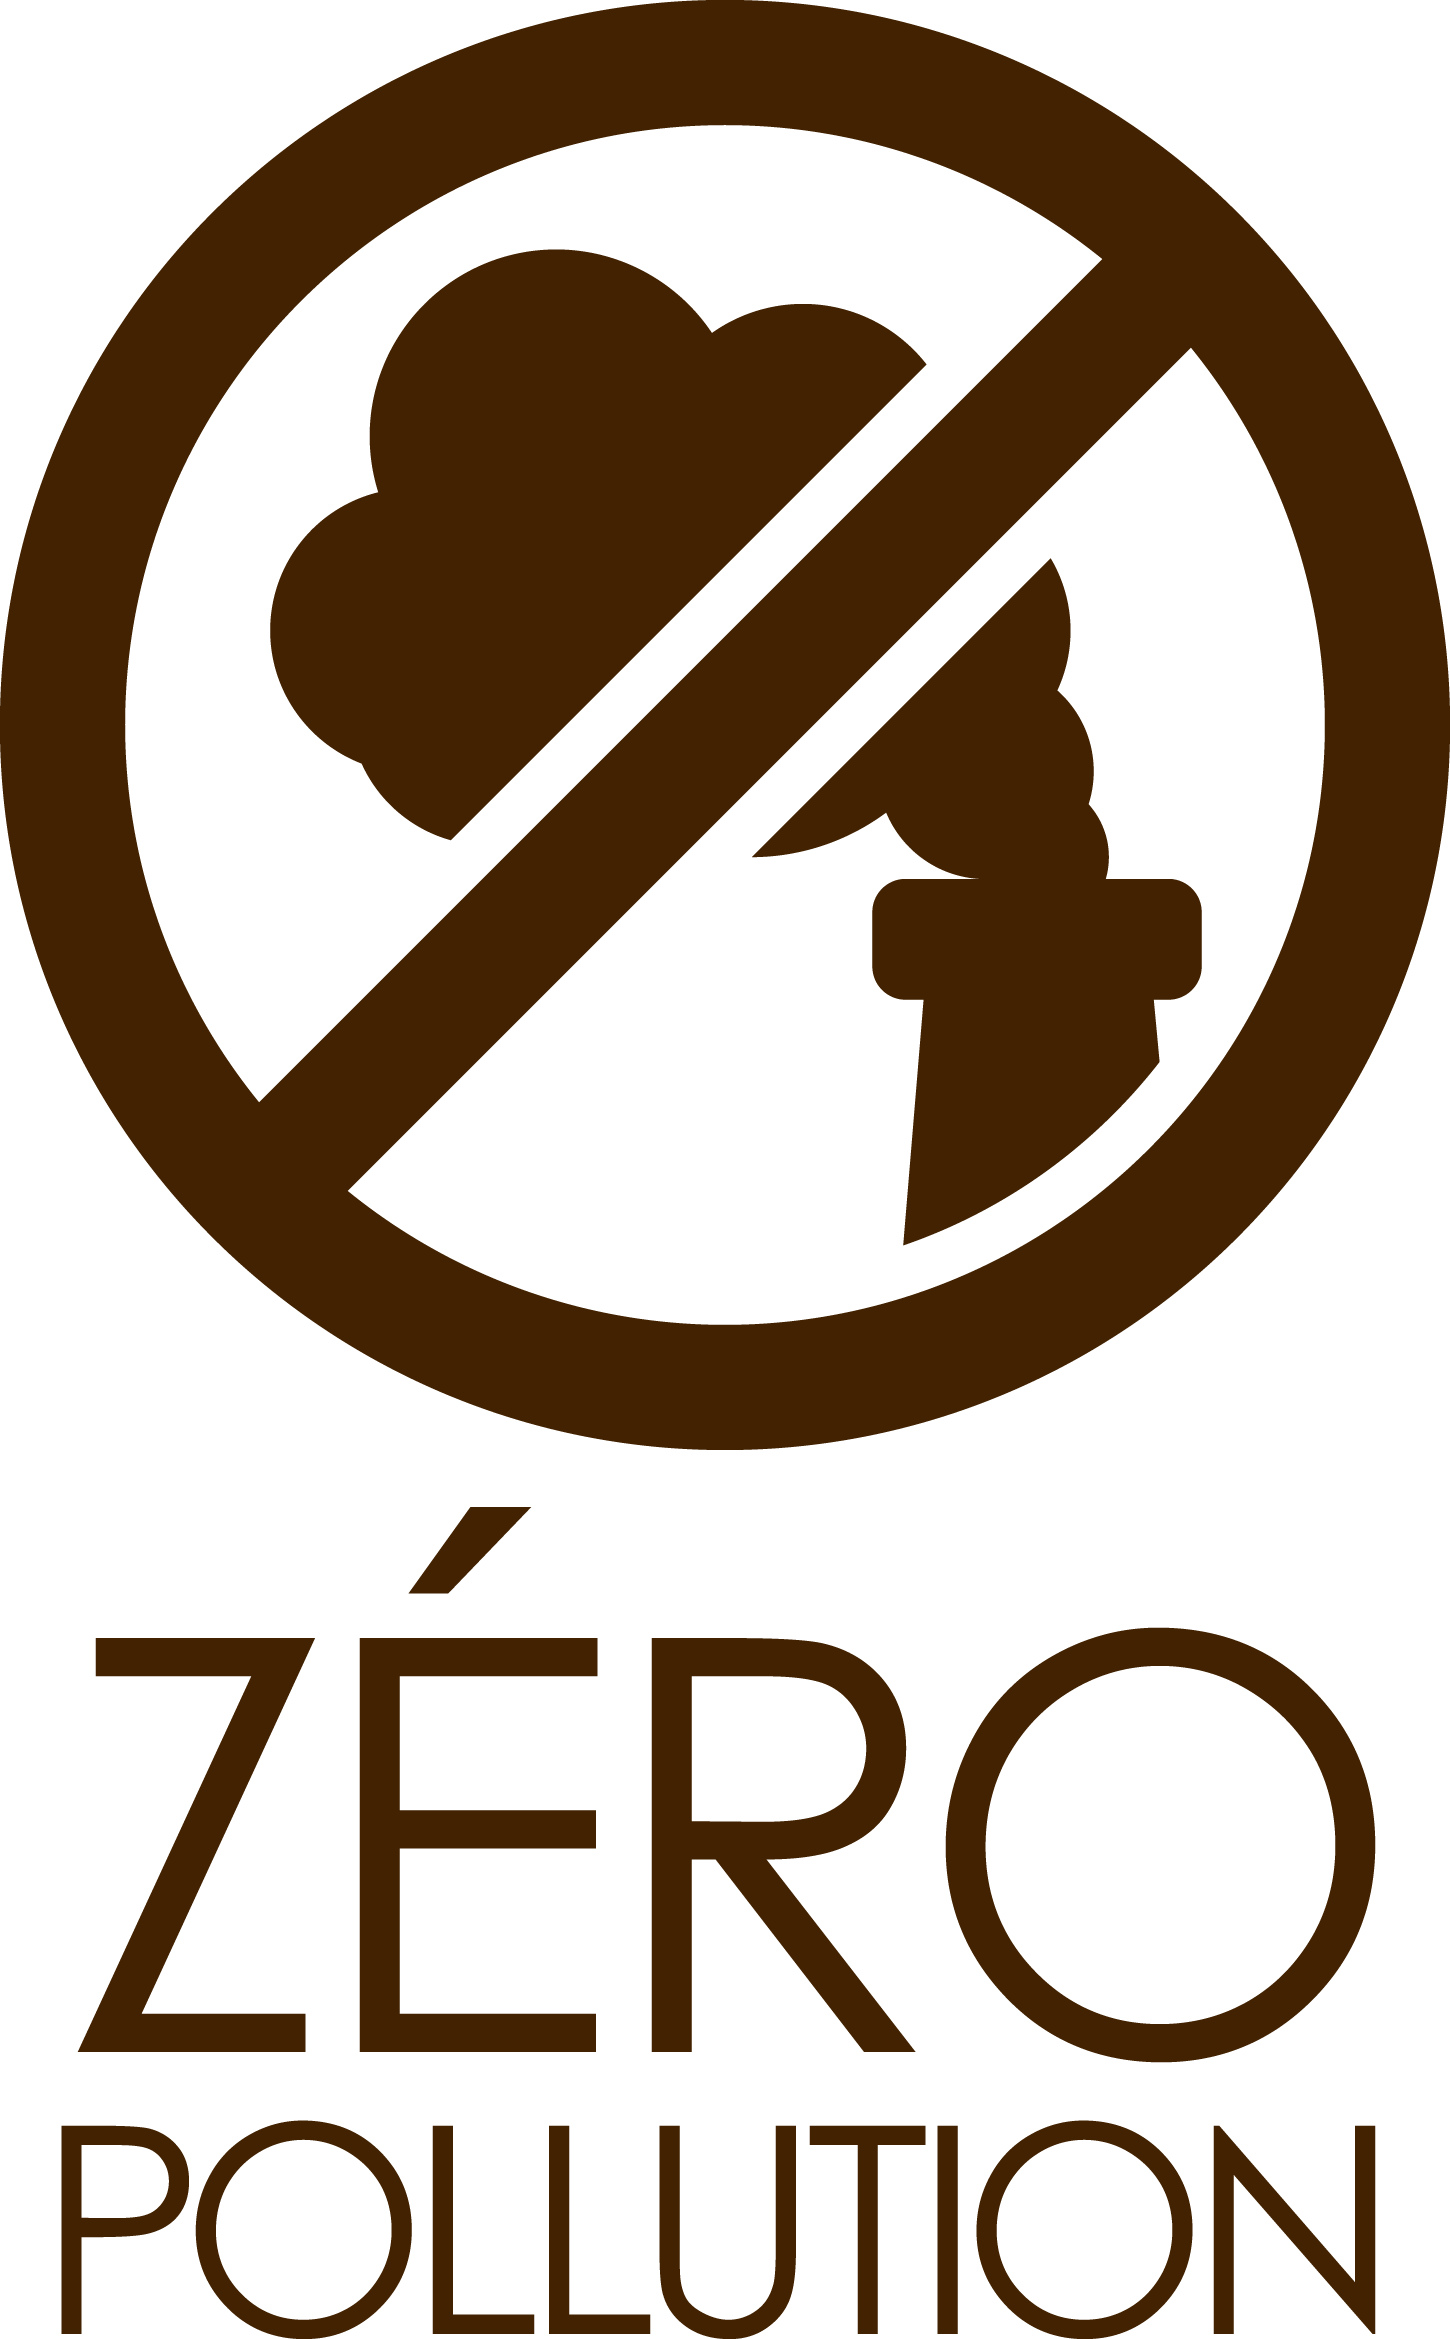 Zéro pollution